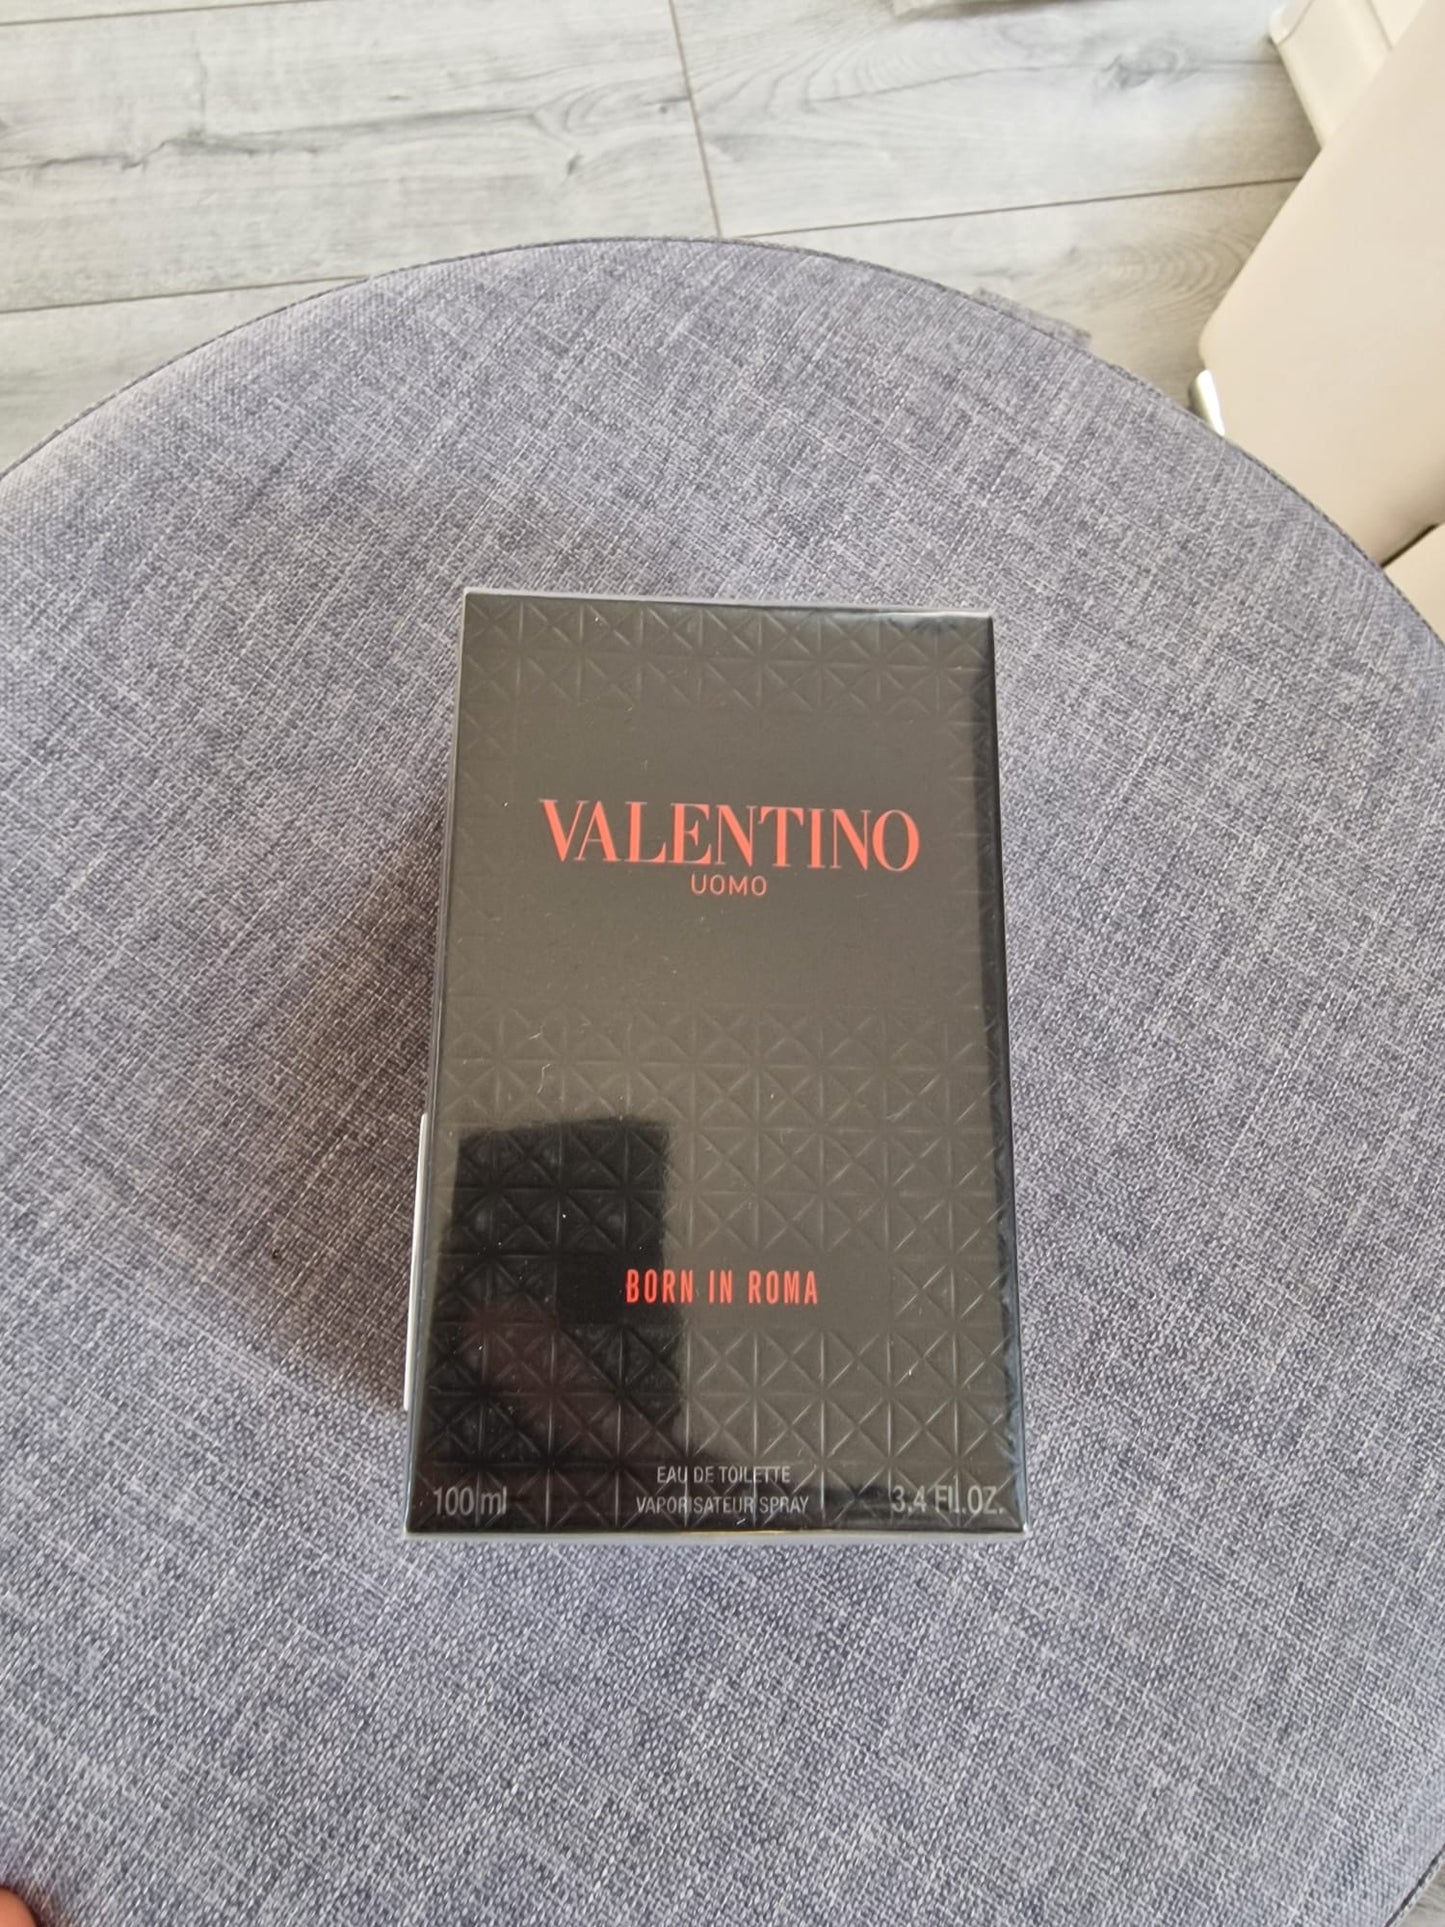 Valentino parfem